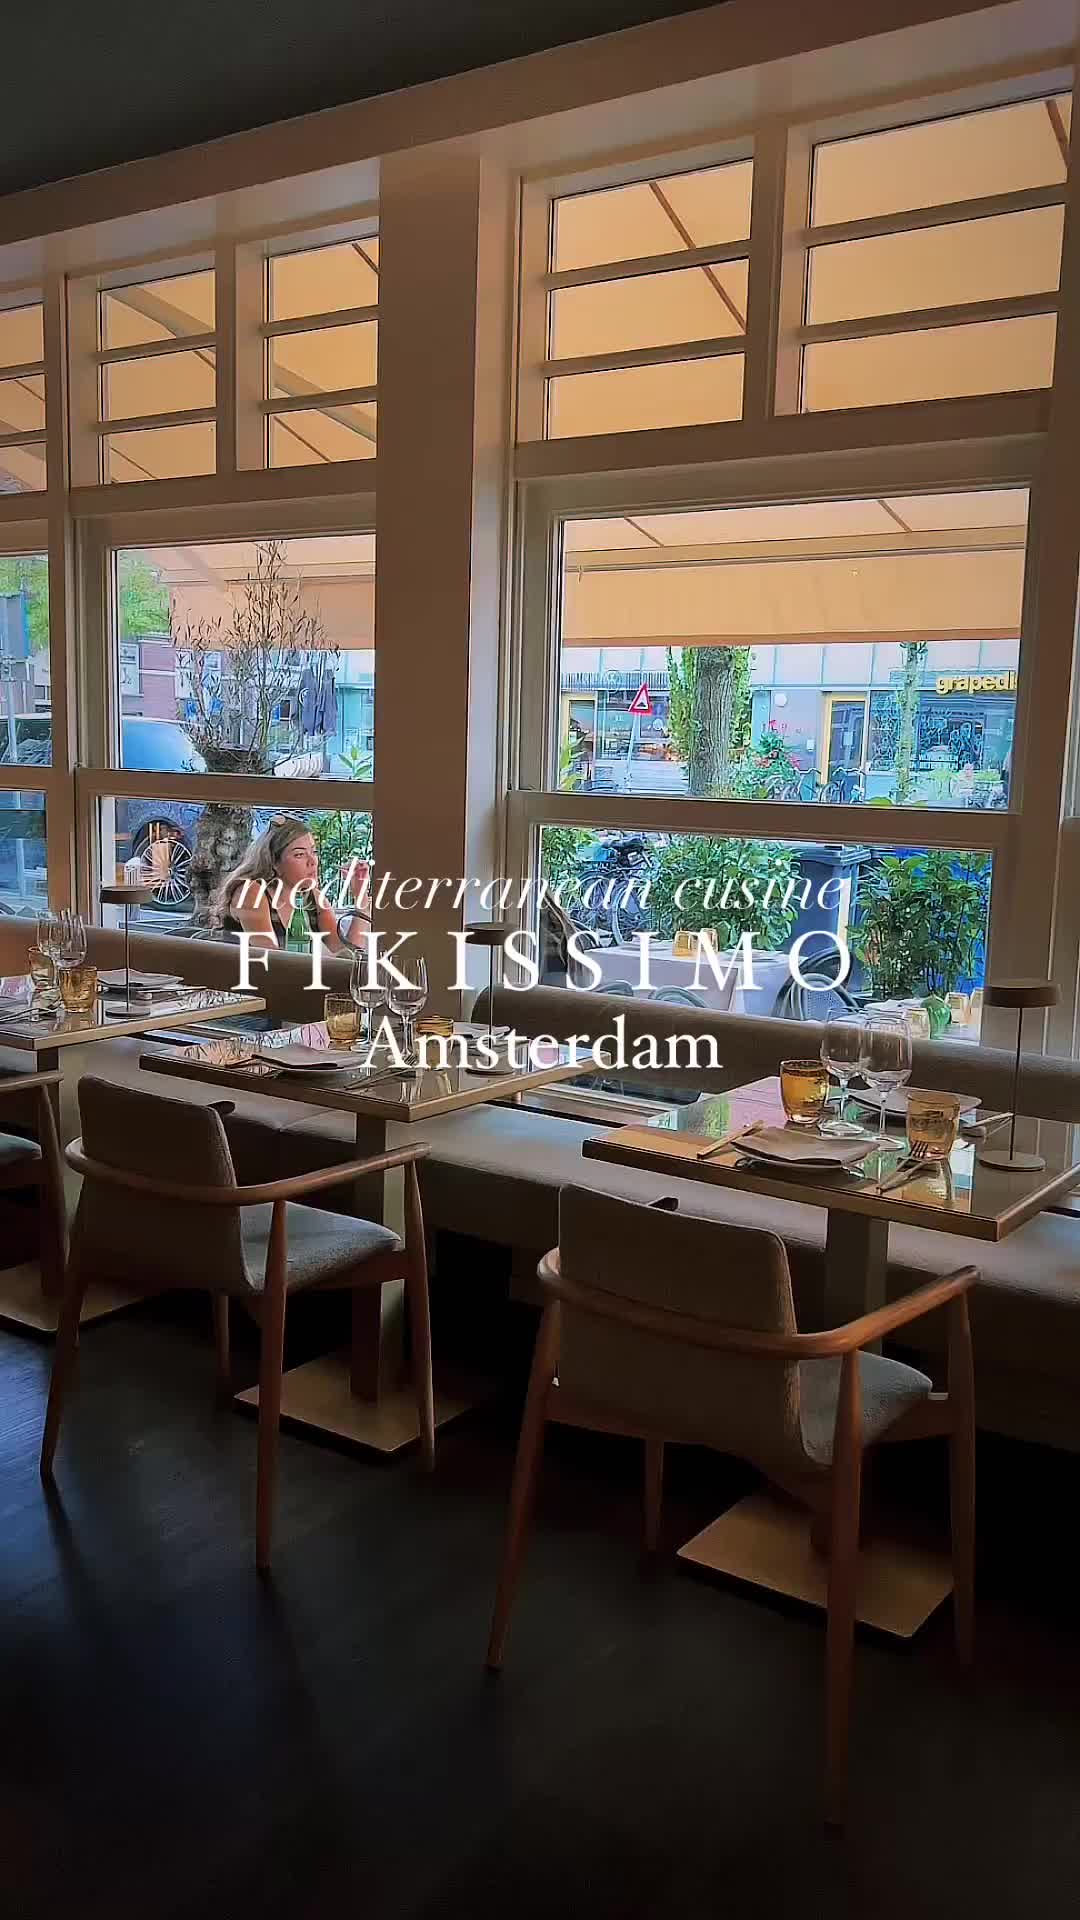 A Mediterranean Cuisine Experience in Amsterdam